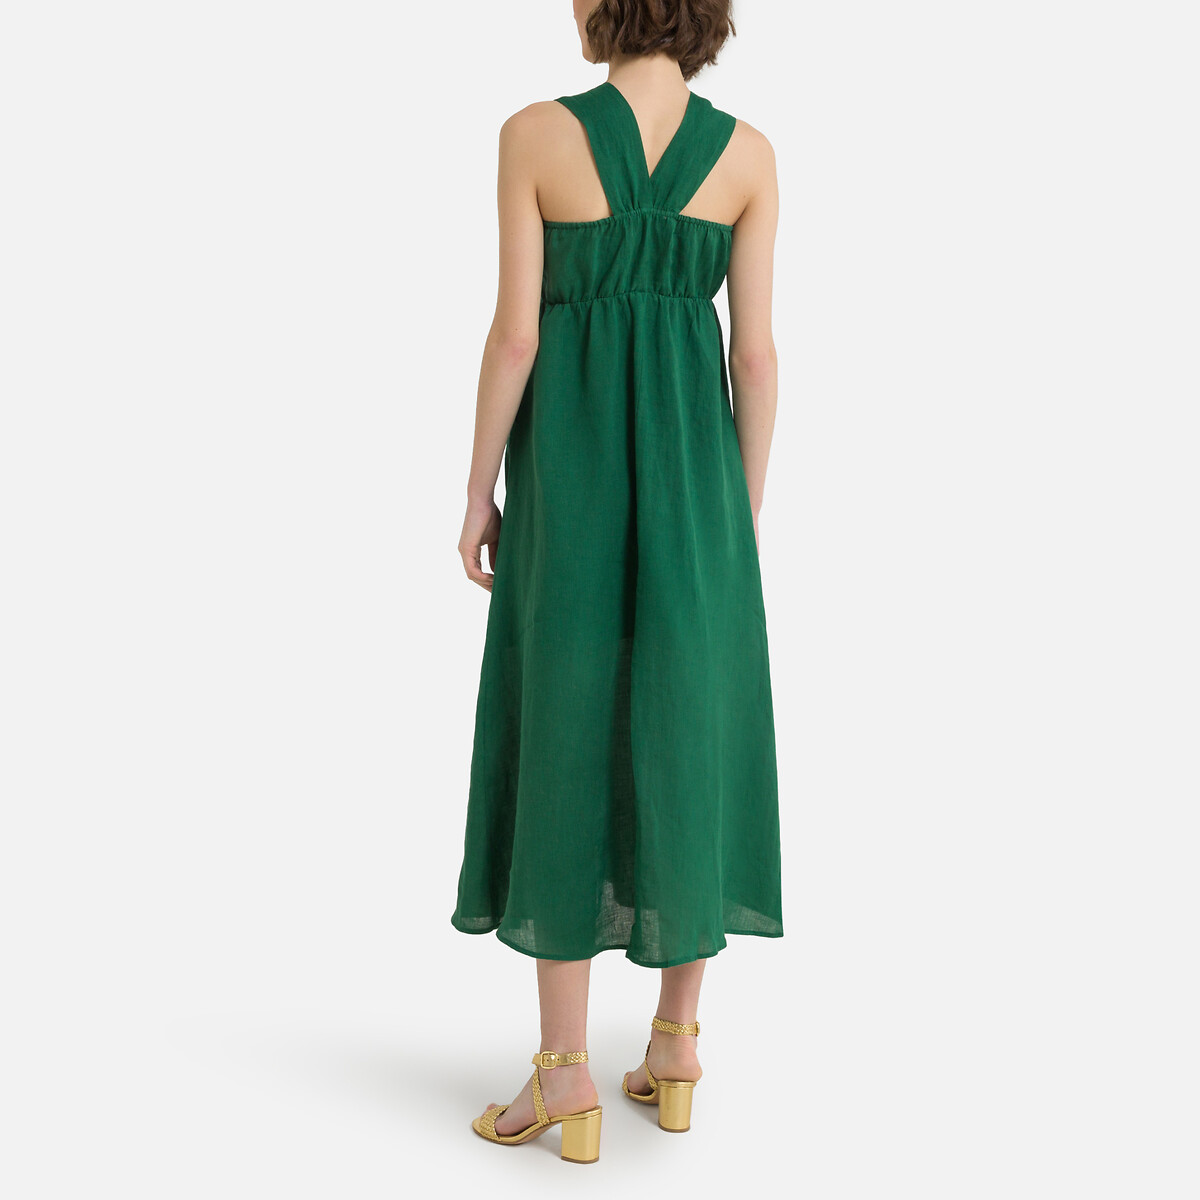 Платье SEE U SOON Длинное с бретельками-завязками 3(L) зеленый, размер 3(L) Длинное с бретельками-завязками 3(L) зеленый - фото 4